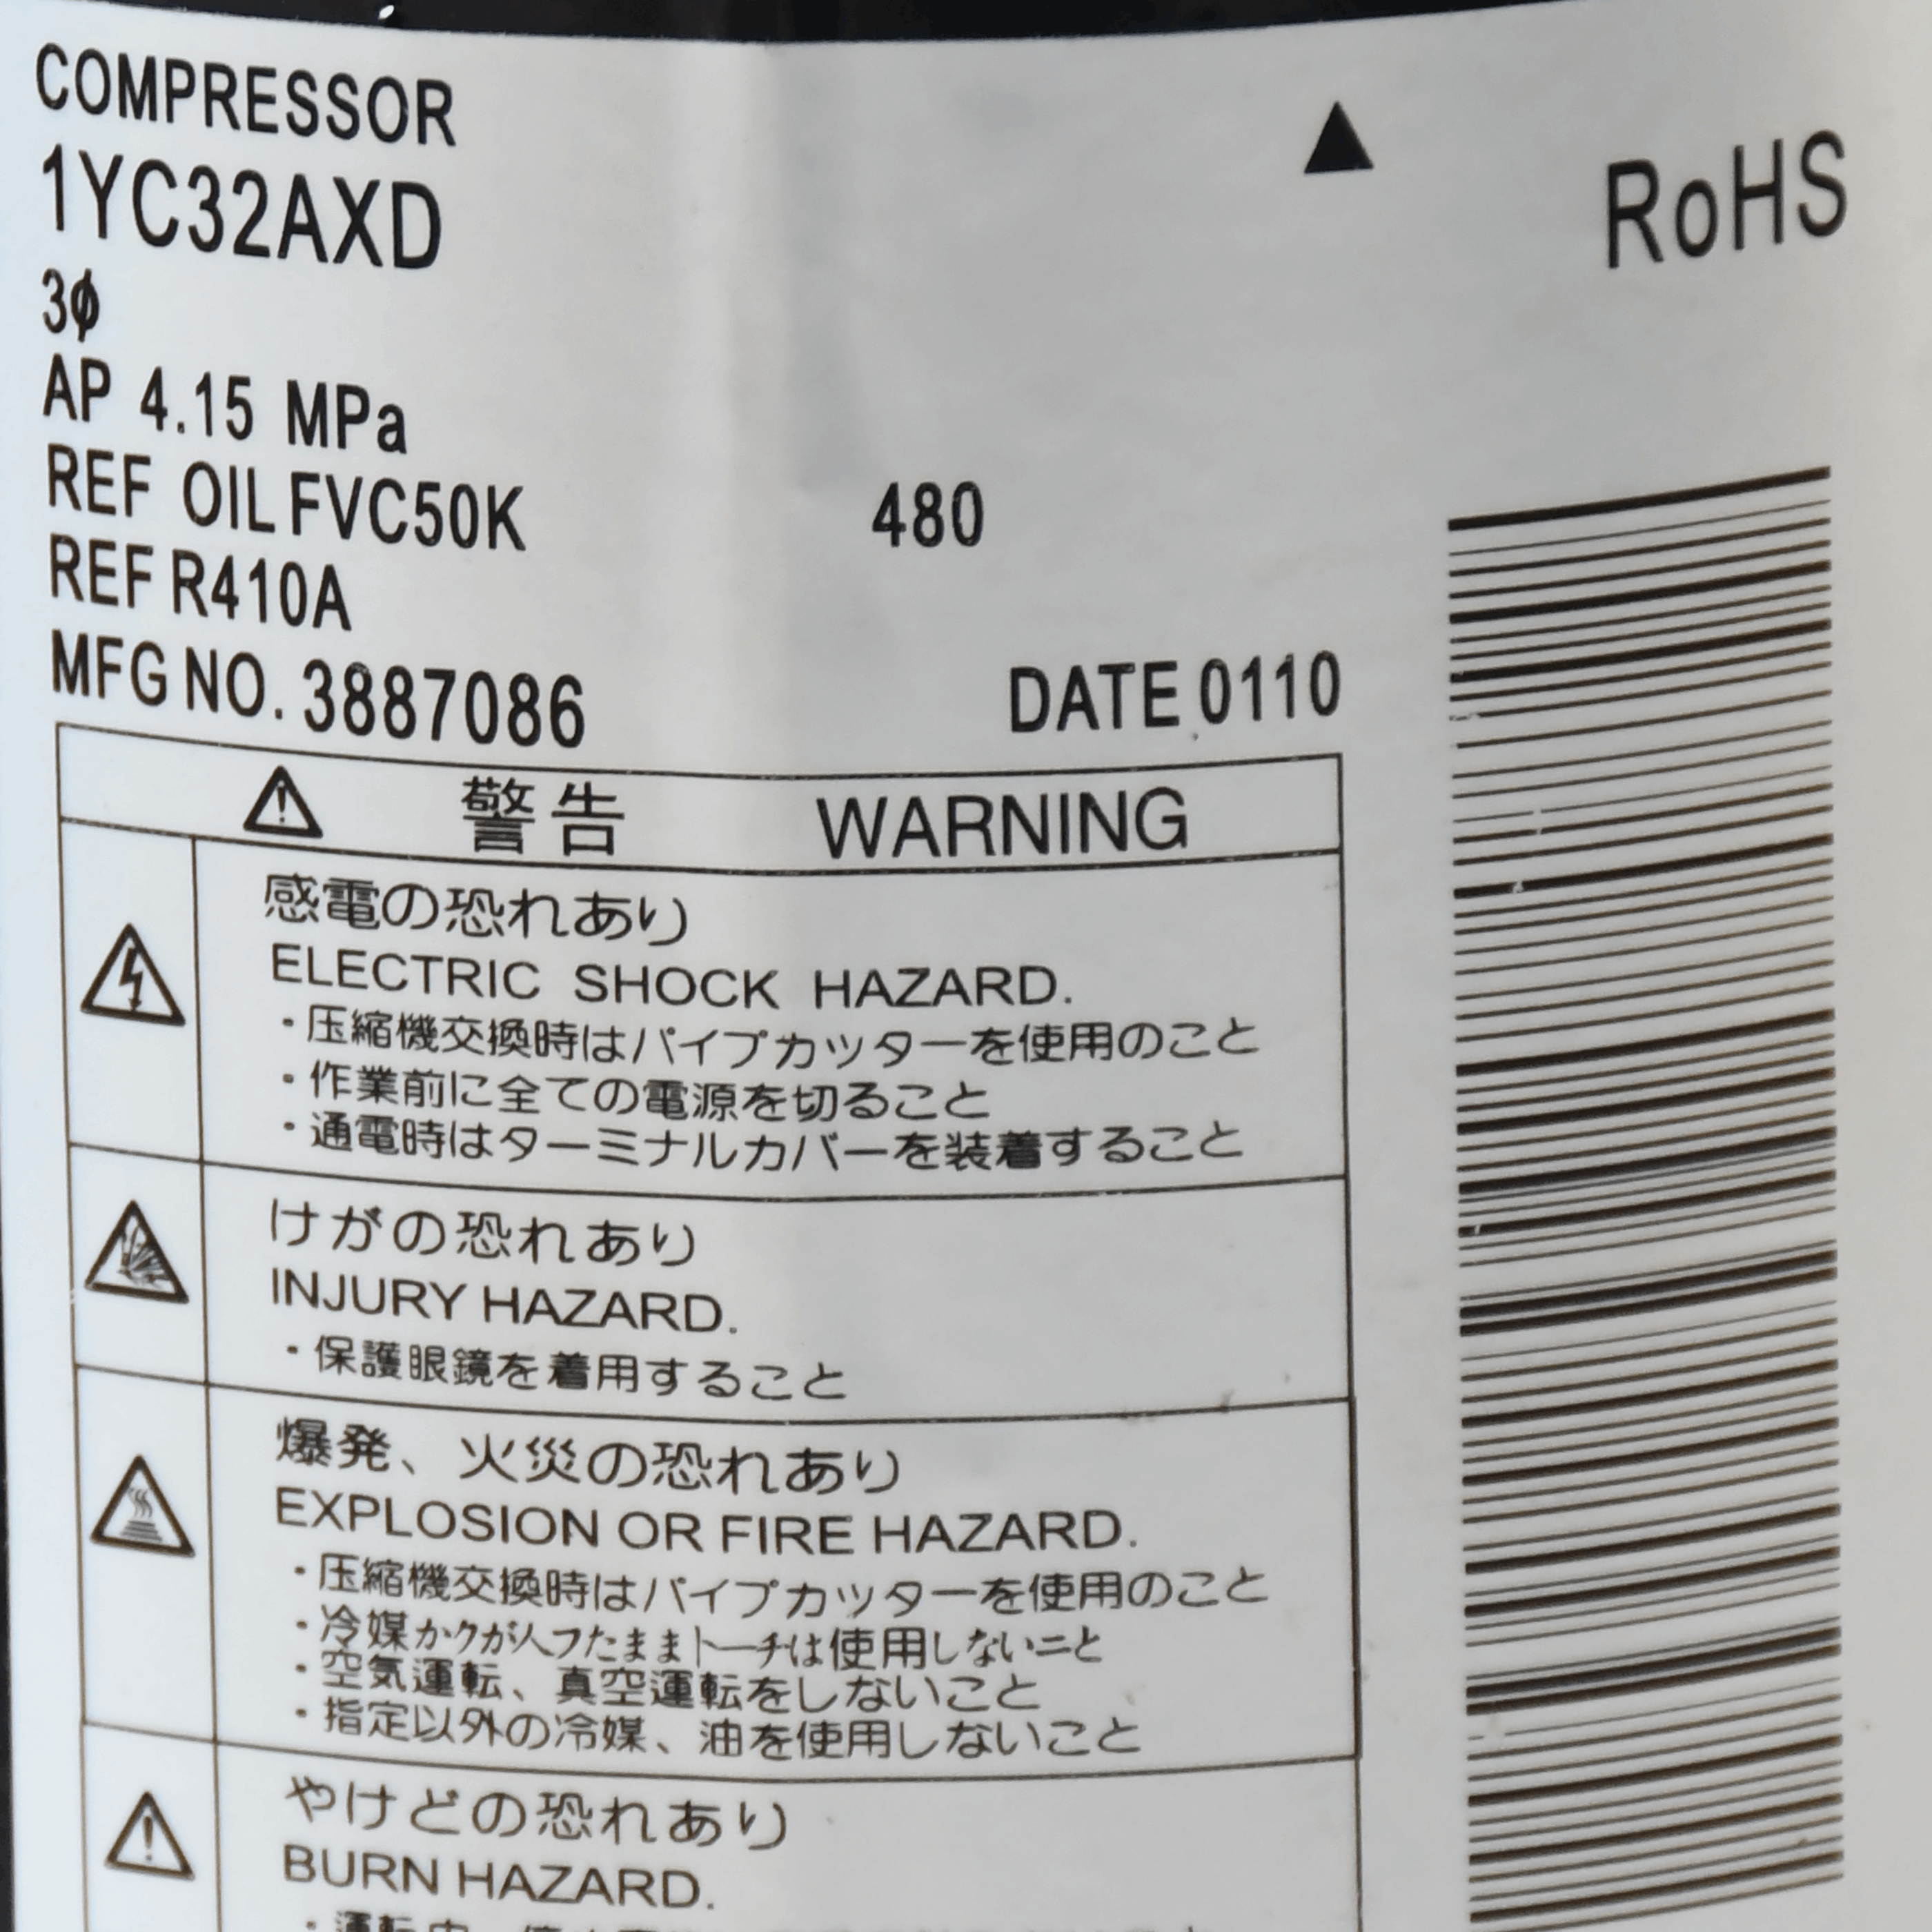 Daikin Compressor 1YC32AXD